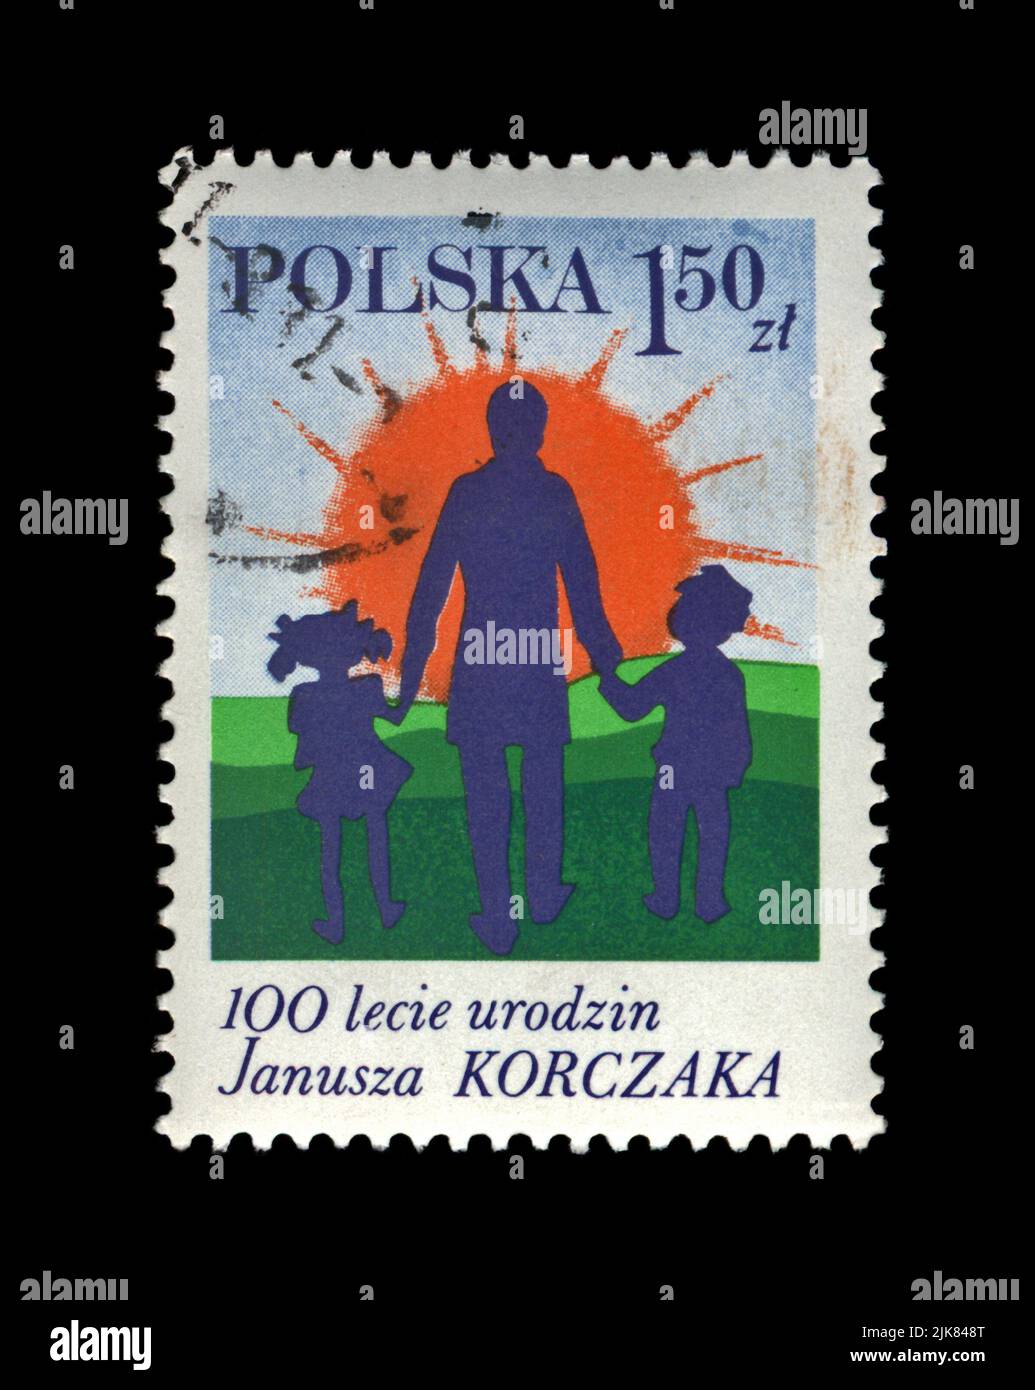 Janusz Korczak e bambini, centenario della nascita, circa 1978. J.Korczak (lug 22,1878-ago 6,1942, Treblinka) - famoso medico, educatore, scrittore. Foto Stock